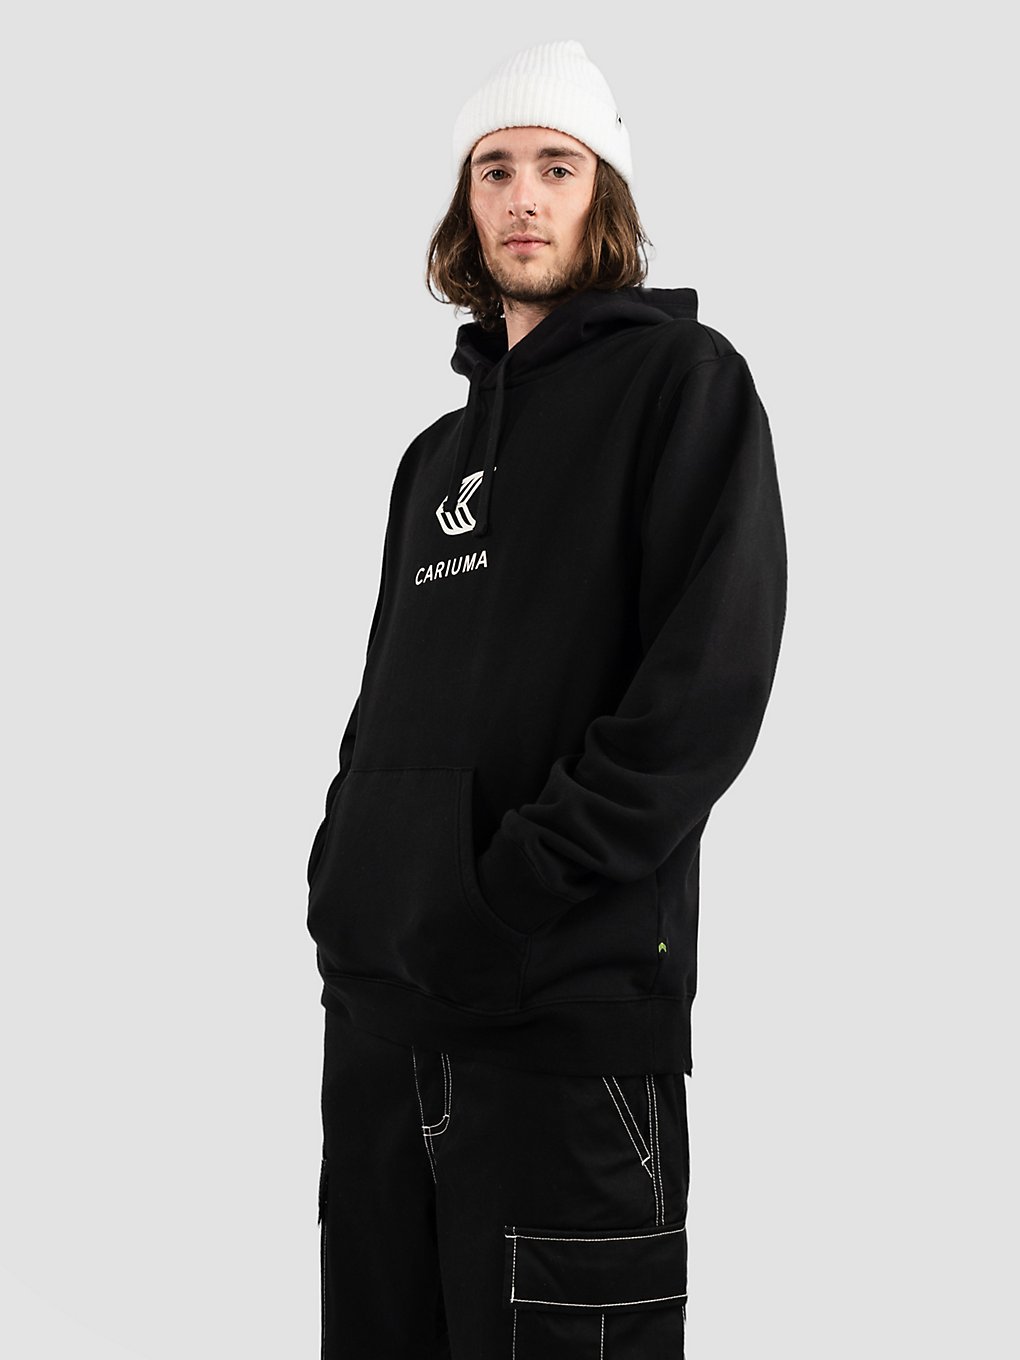 cariuma center hoodie black